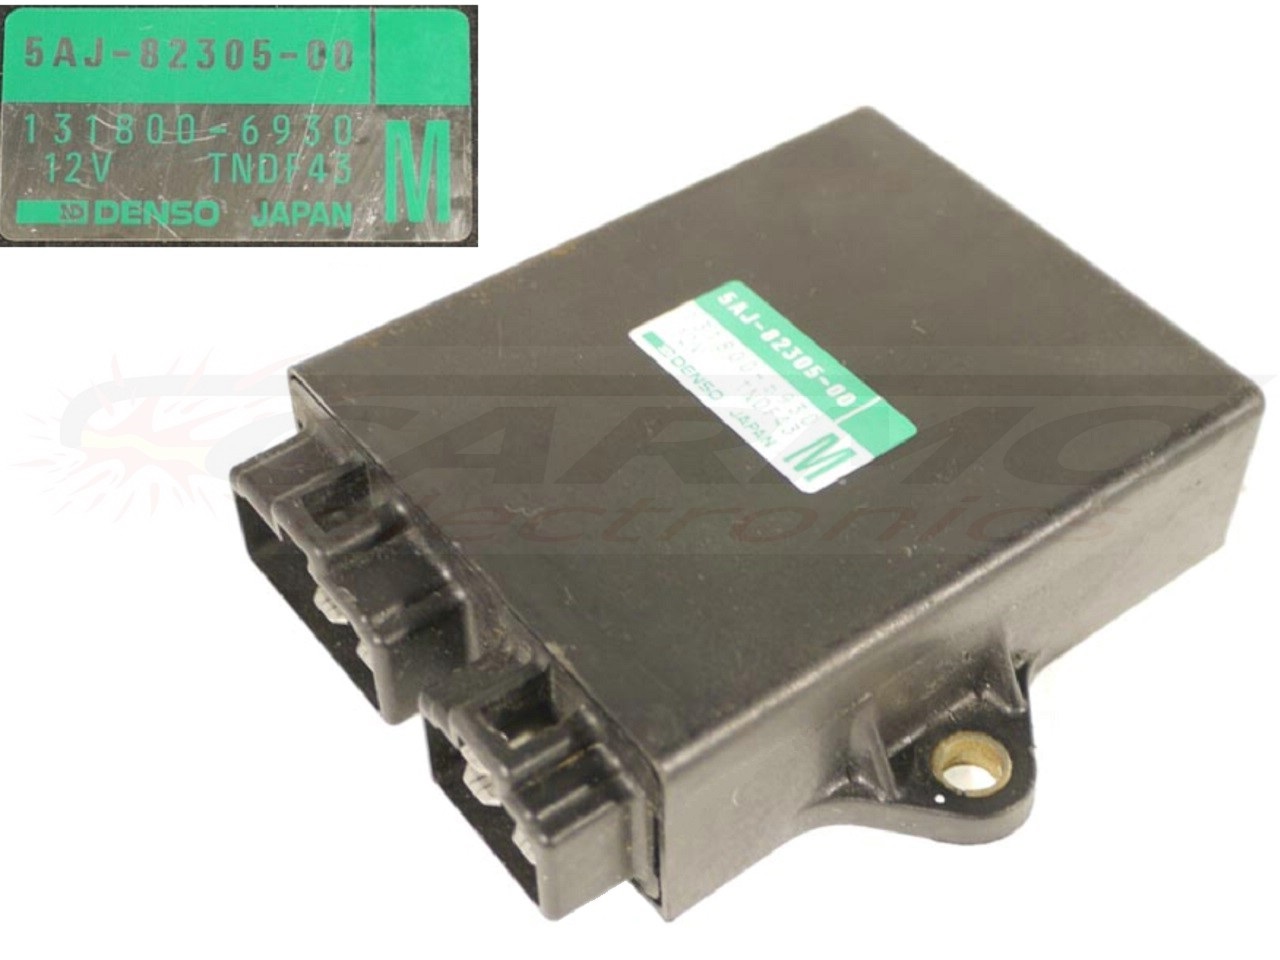 XV125 Virago TCI CDI dispositif de commande boîte noire (5AJ-82305-00, 131800-6930)